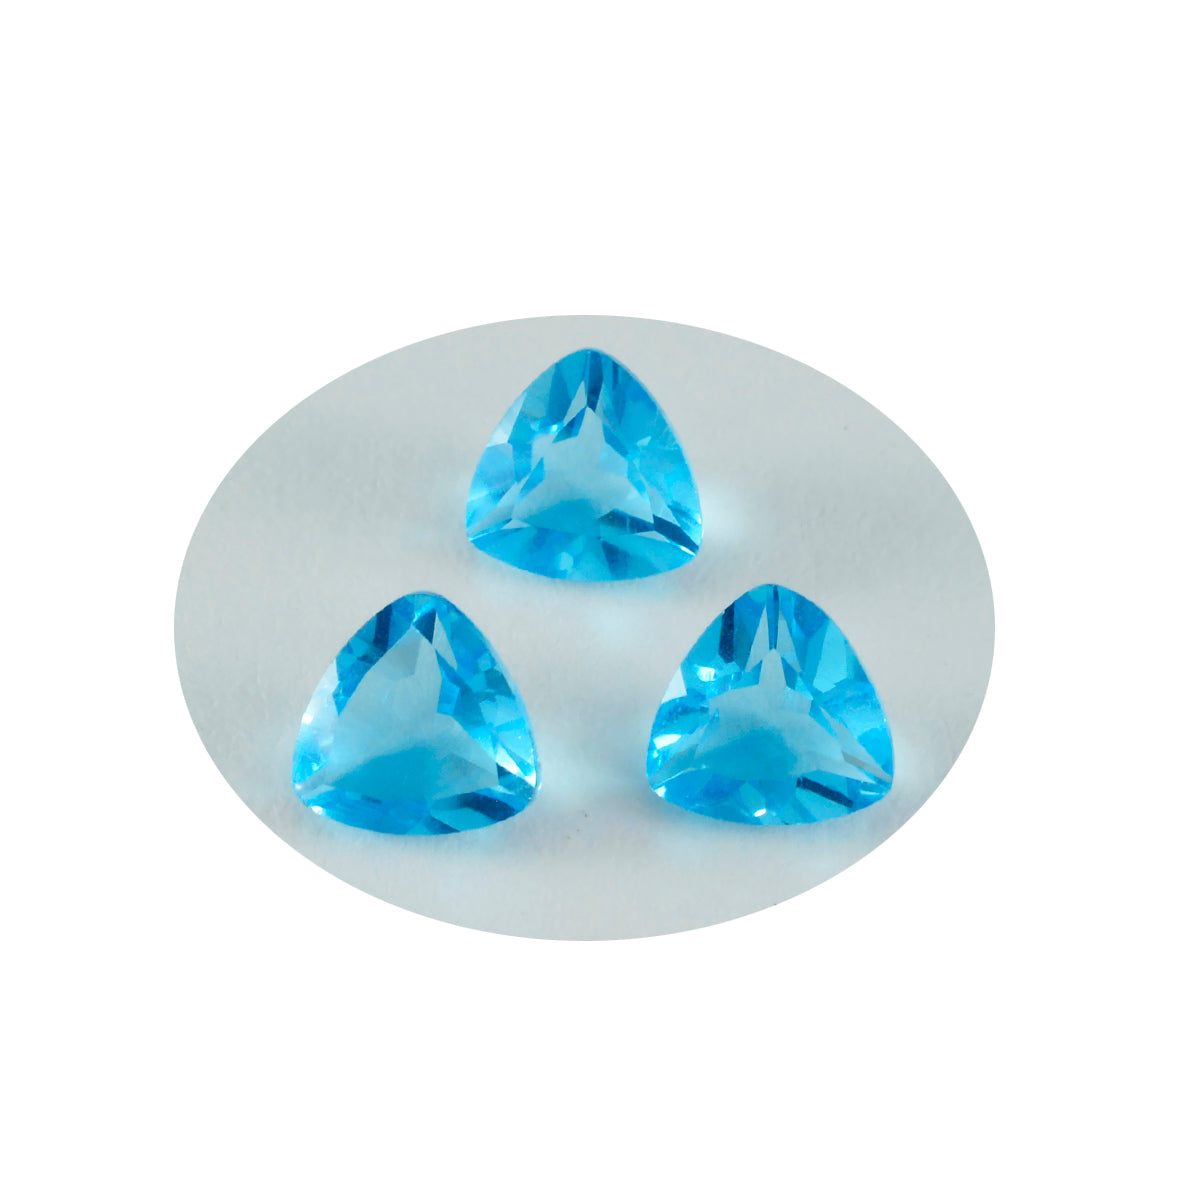 Riyogems 1PC Blue Topaz CZ Faceted 10x10 mm Trillion Shape awesome Quality Gems